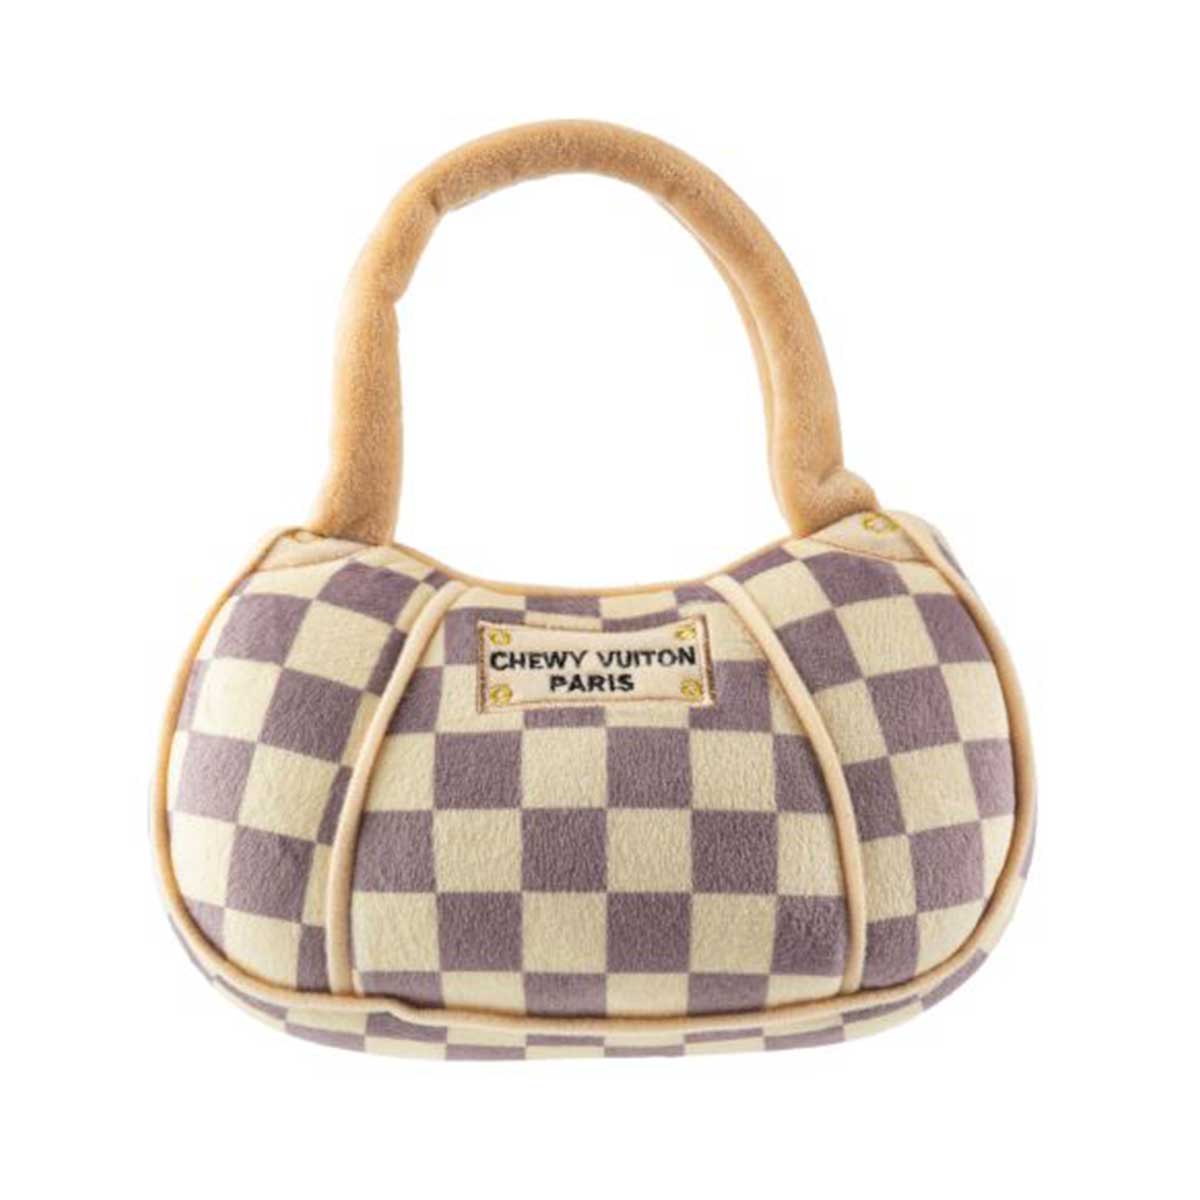 Checker Chewy Vuiton Handbag Dog Toy | Pawlicious & Company